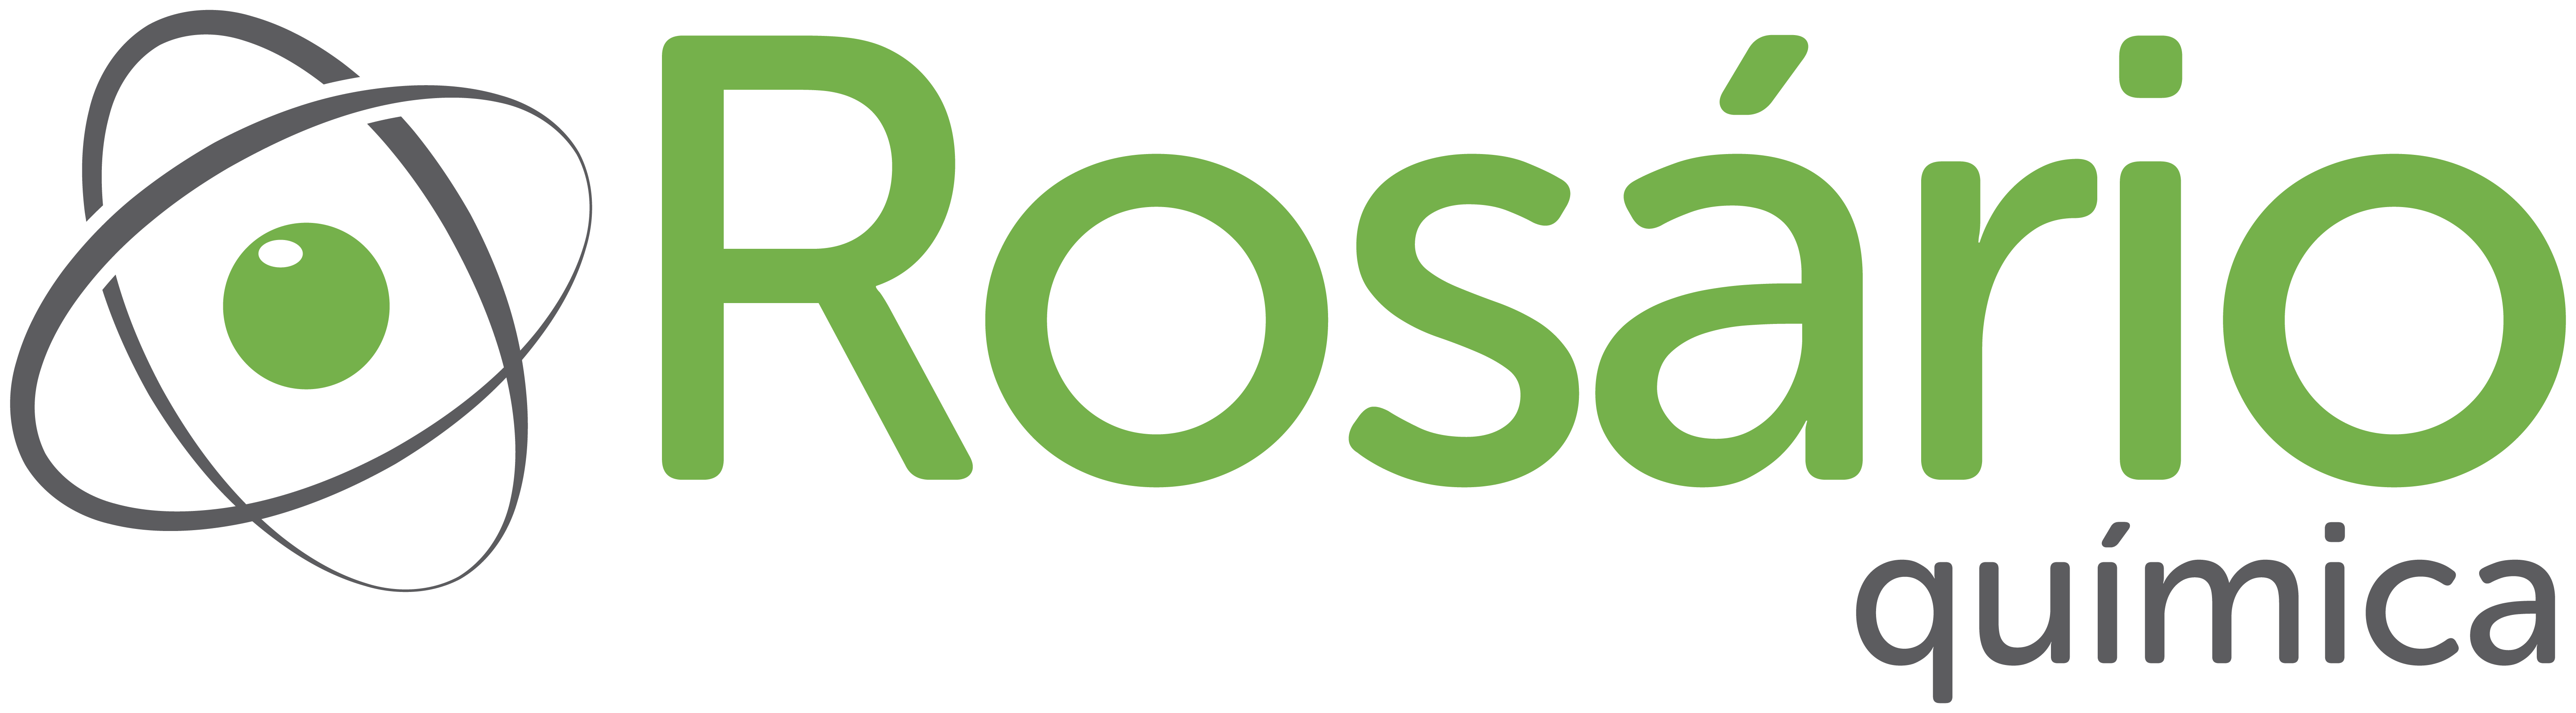 Logomarca de Rosário Química